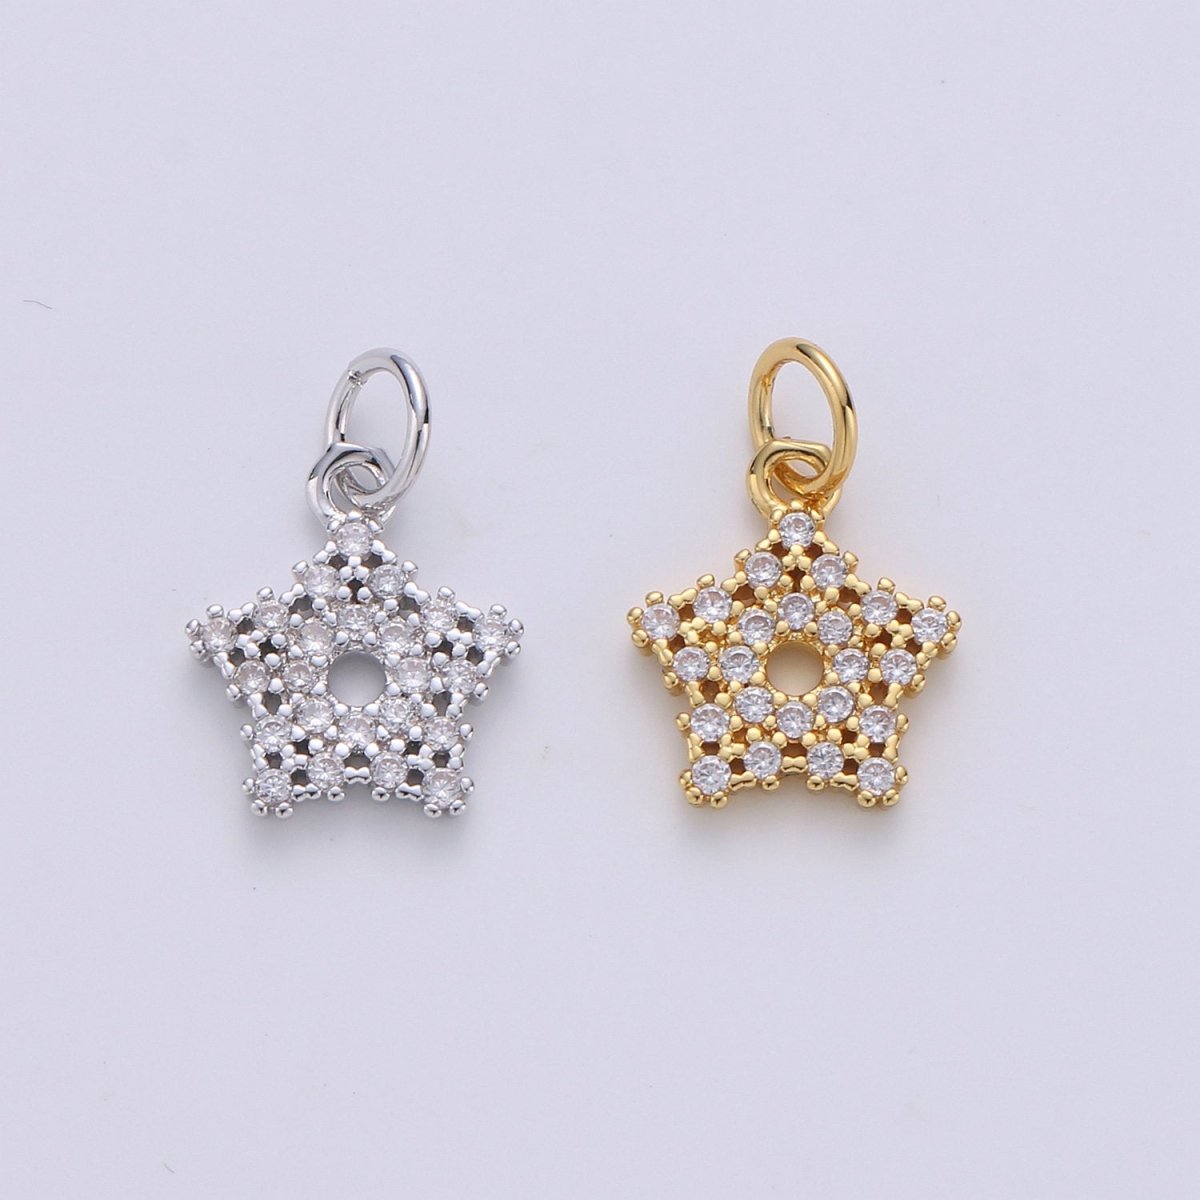 24K Gold Filled Tiny Twinkle Star Charm, Silver Tiny Little Star Gold Wish Star Charm, Dainty Small Cute CZ Charm Bracelet Earring Supply, D-266 D-267 - DLUXCA